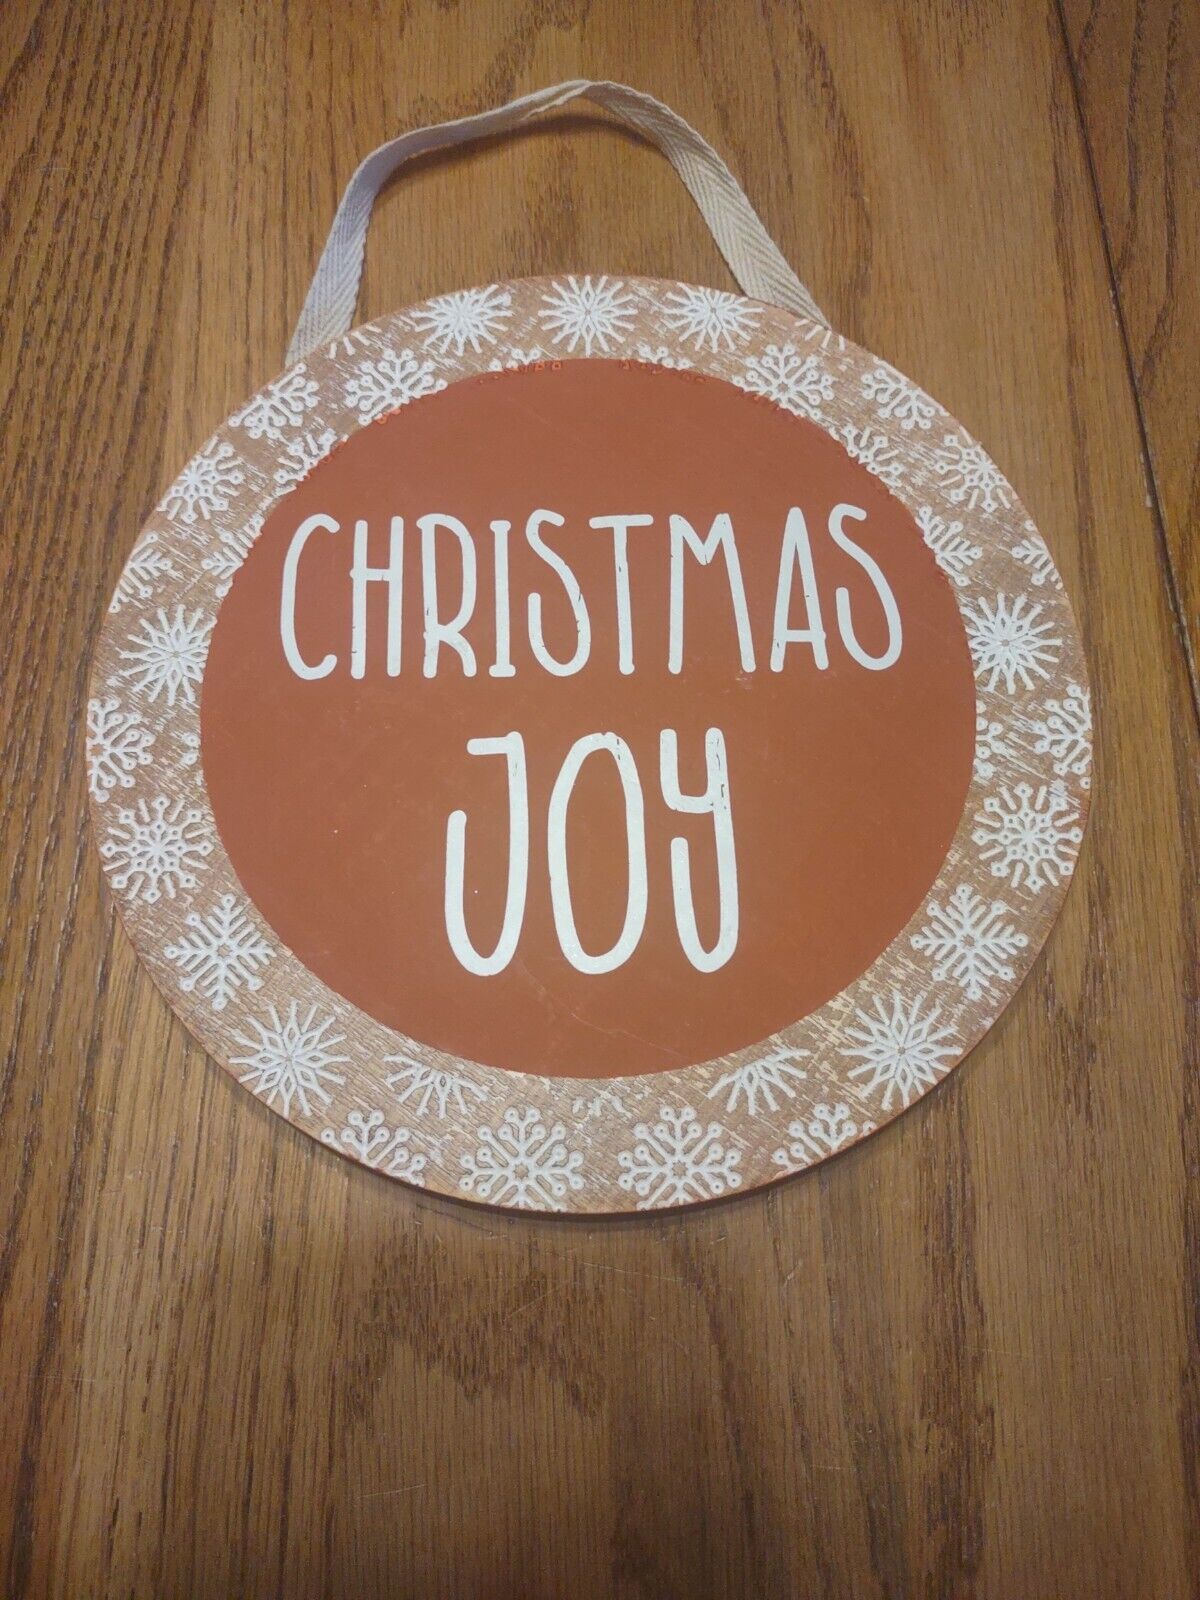 By Kathy "Christmas Joy" 7" Sign - $15.72